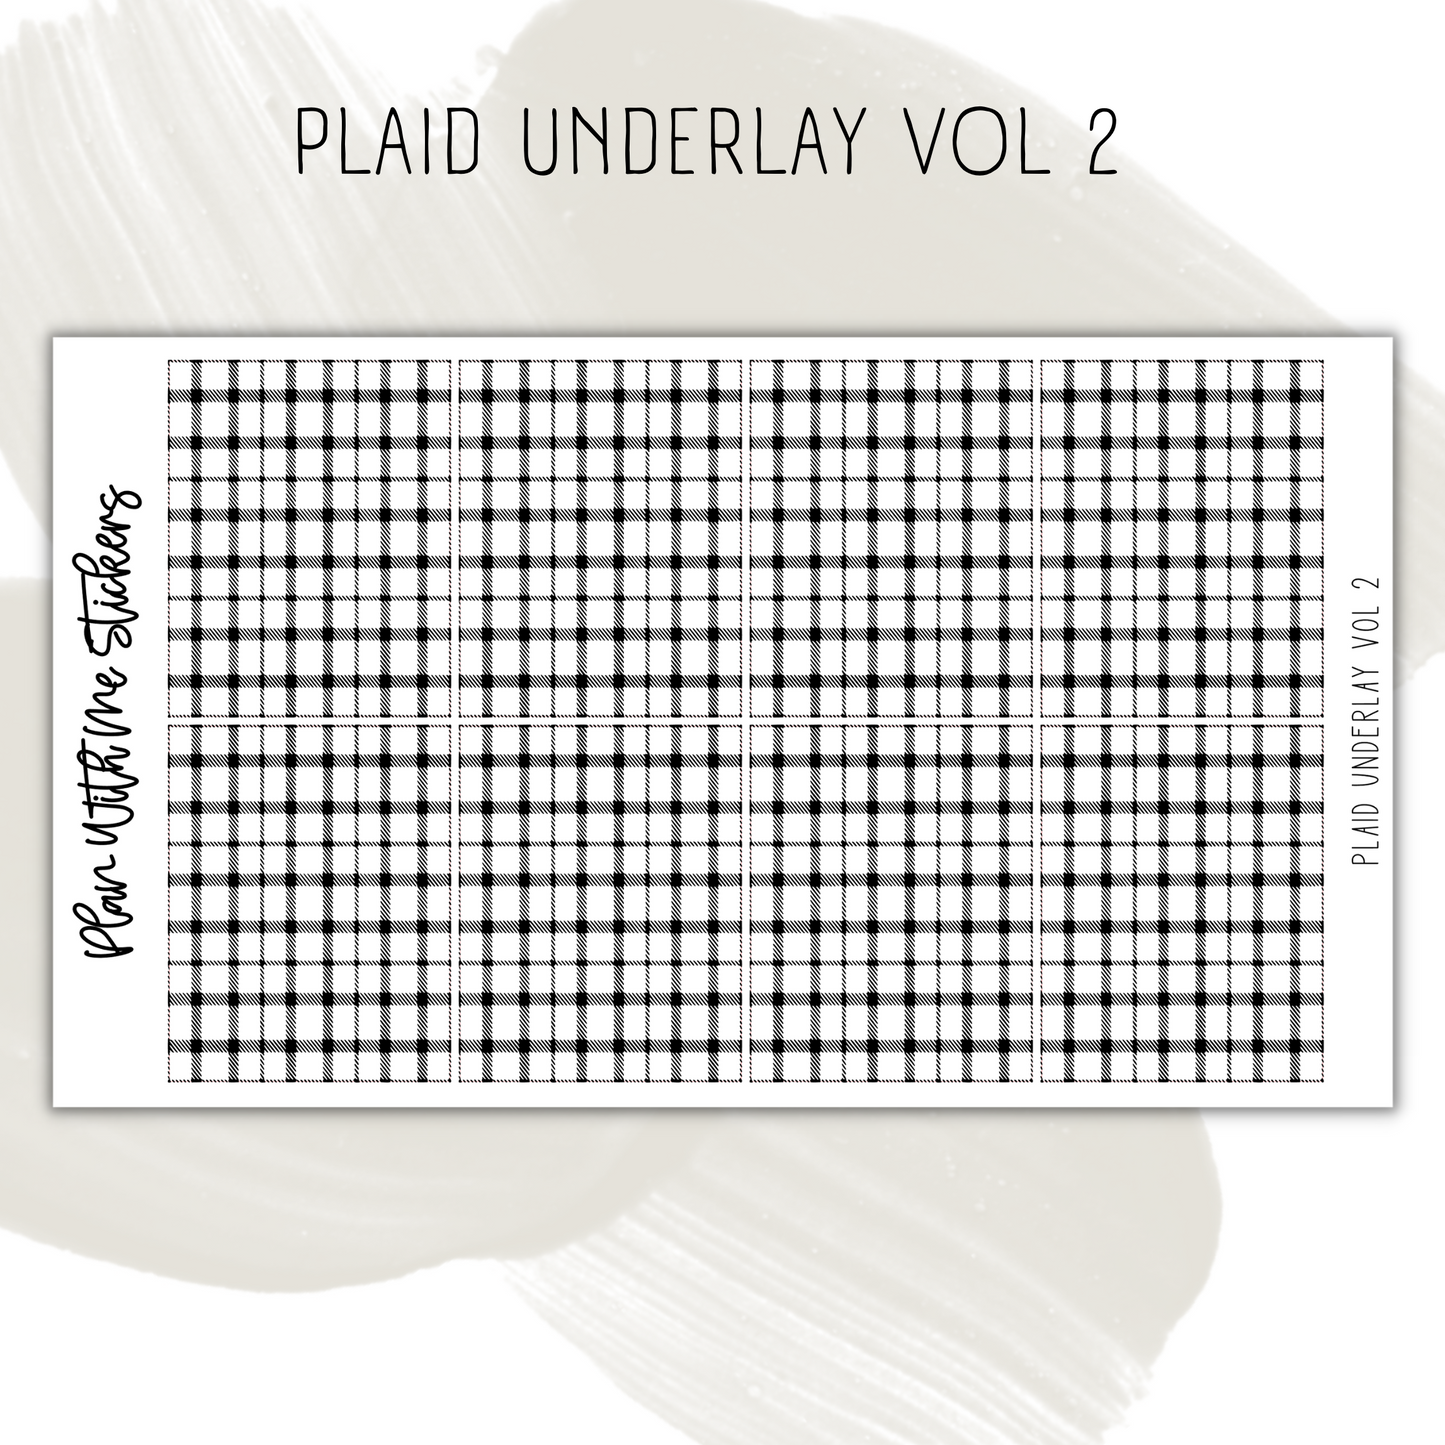 Plaid Underlay Vol 2